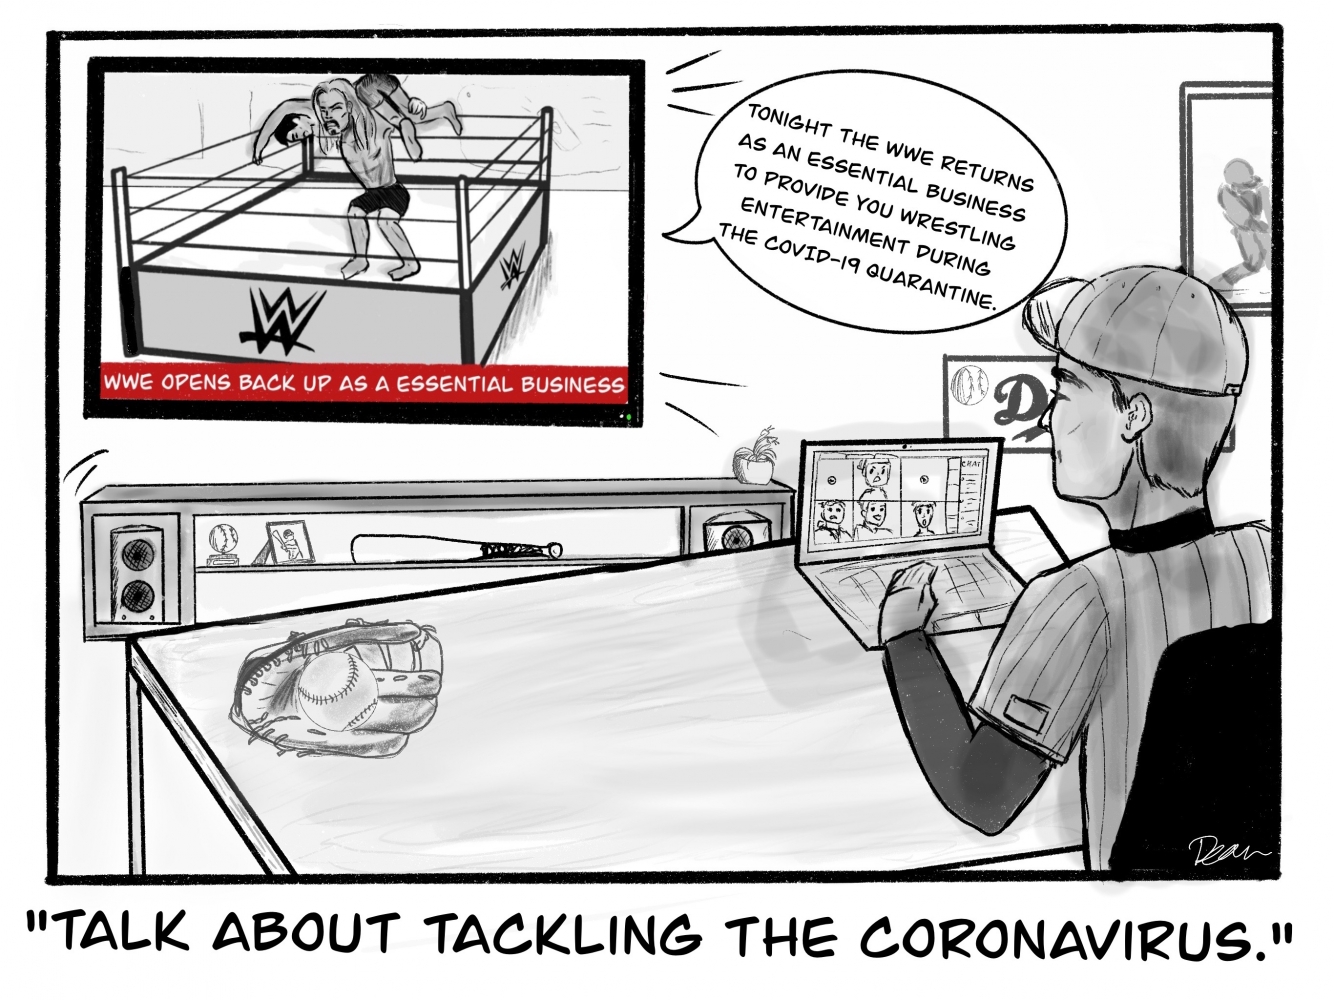 Tackling+the+coronavirus